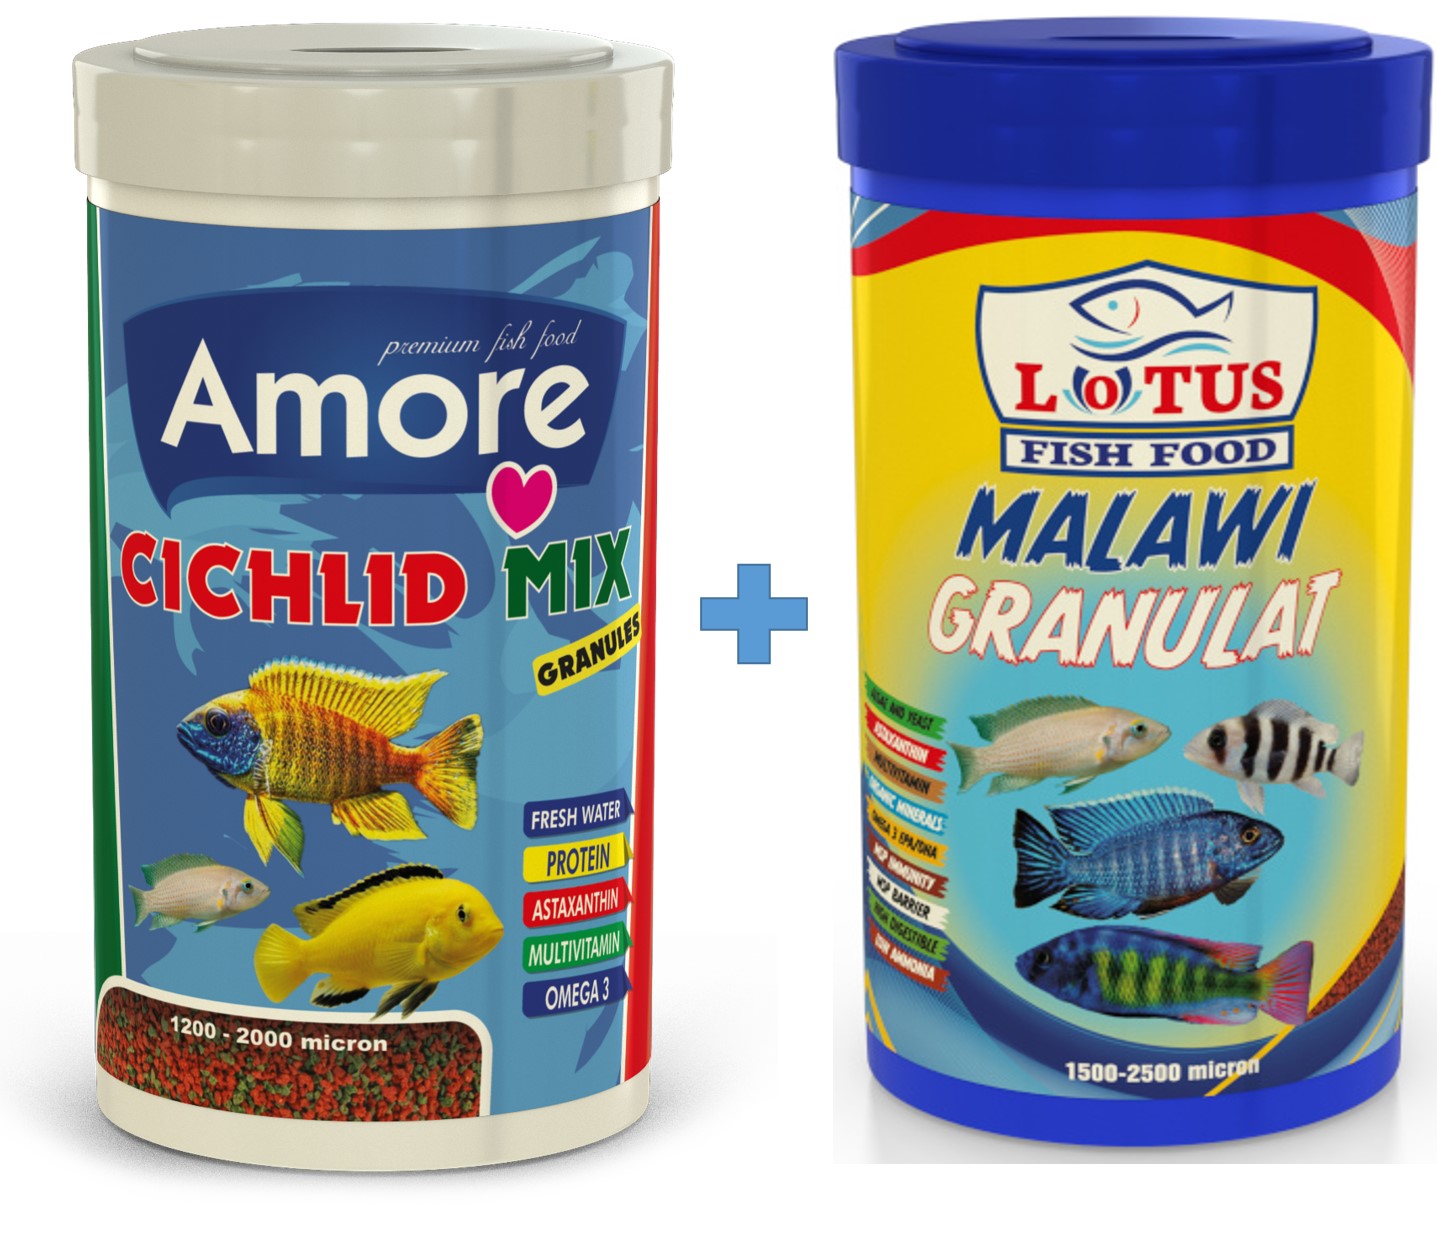 Amore Cichlid Mix Granules 1000ml Ve Lotus Malawi Granulat 1000ml Kutu Balık Yemi